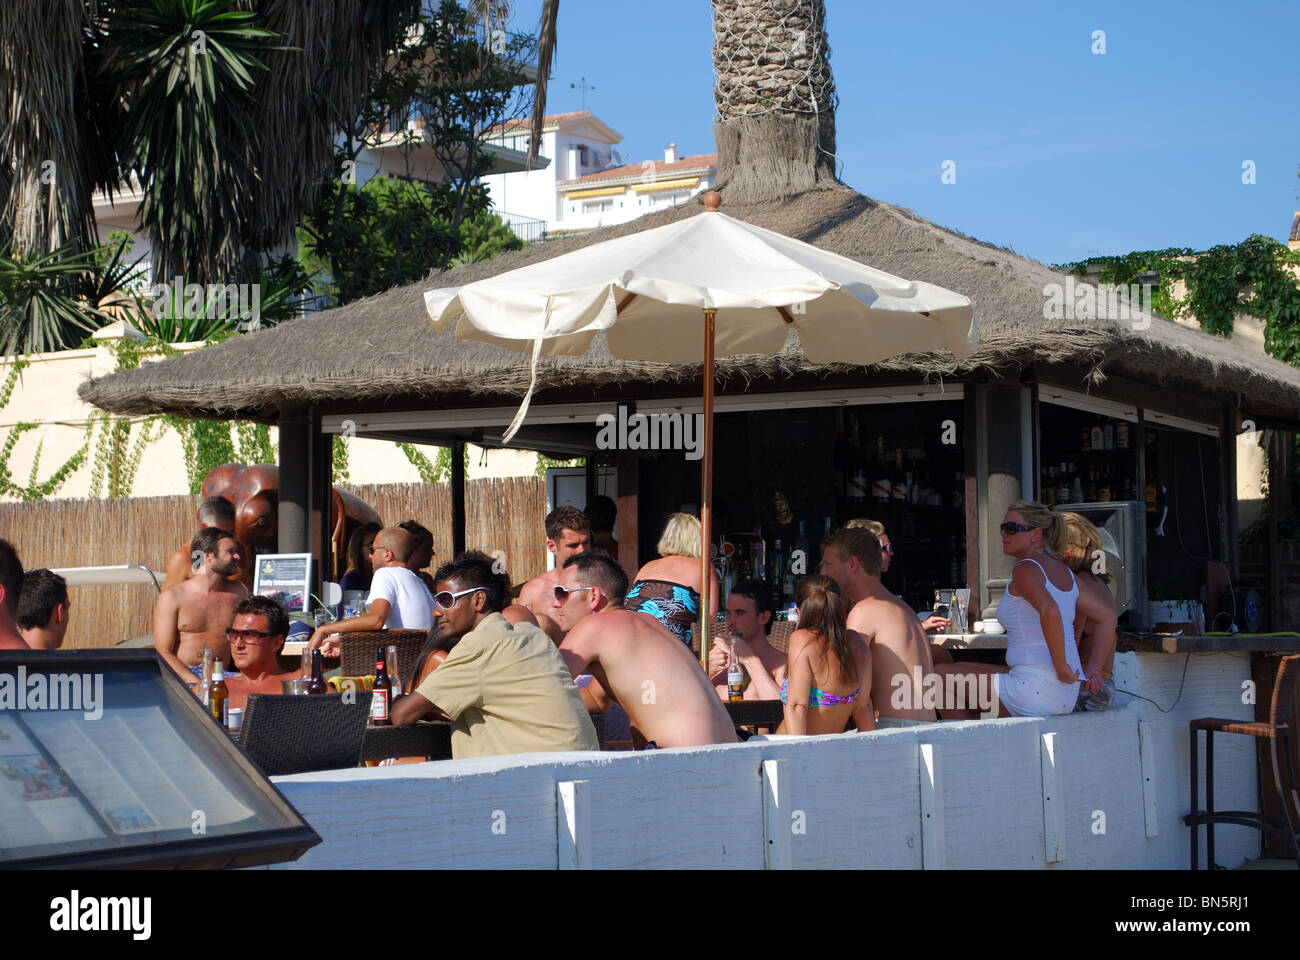 Puerto banus bar fotografías e imágenes de alta resolución - Alamy